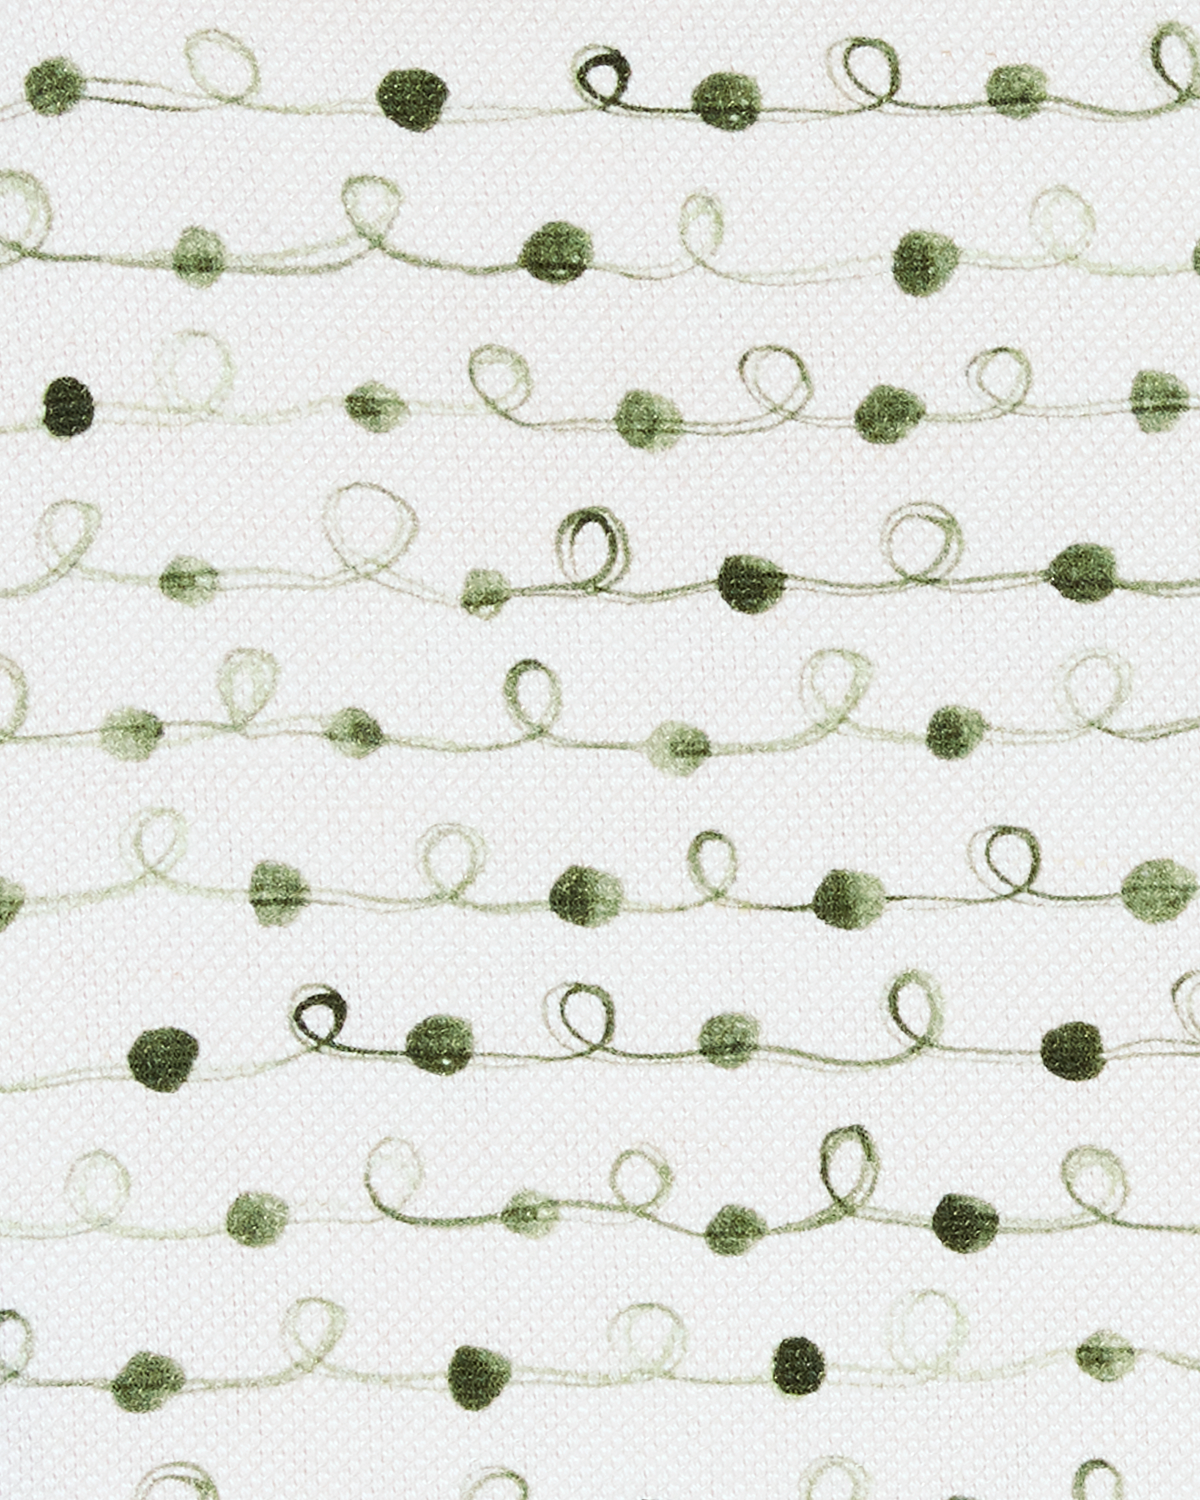 Beaded Ribbon Fabric in Green